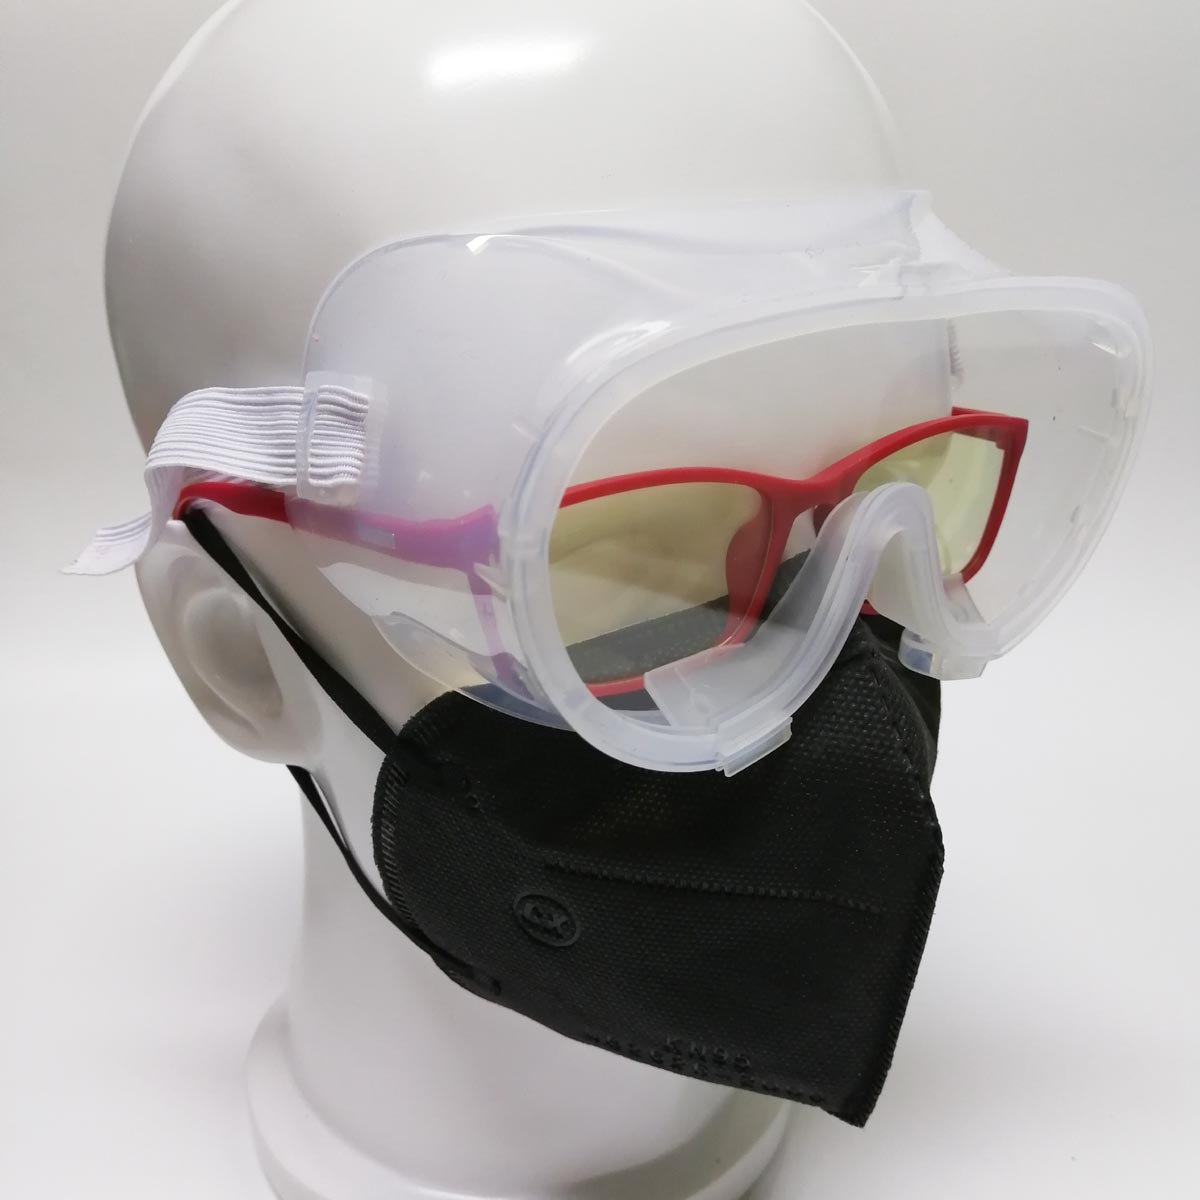 Protective goggles 1.jpg